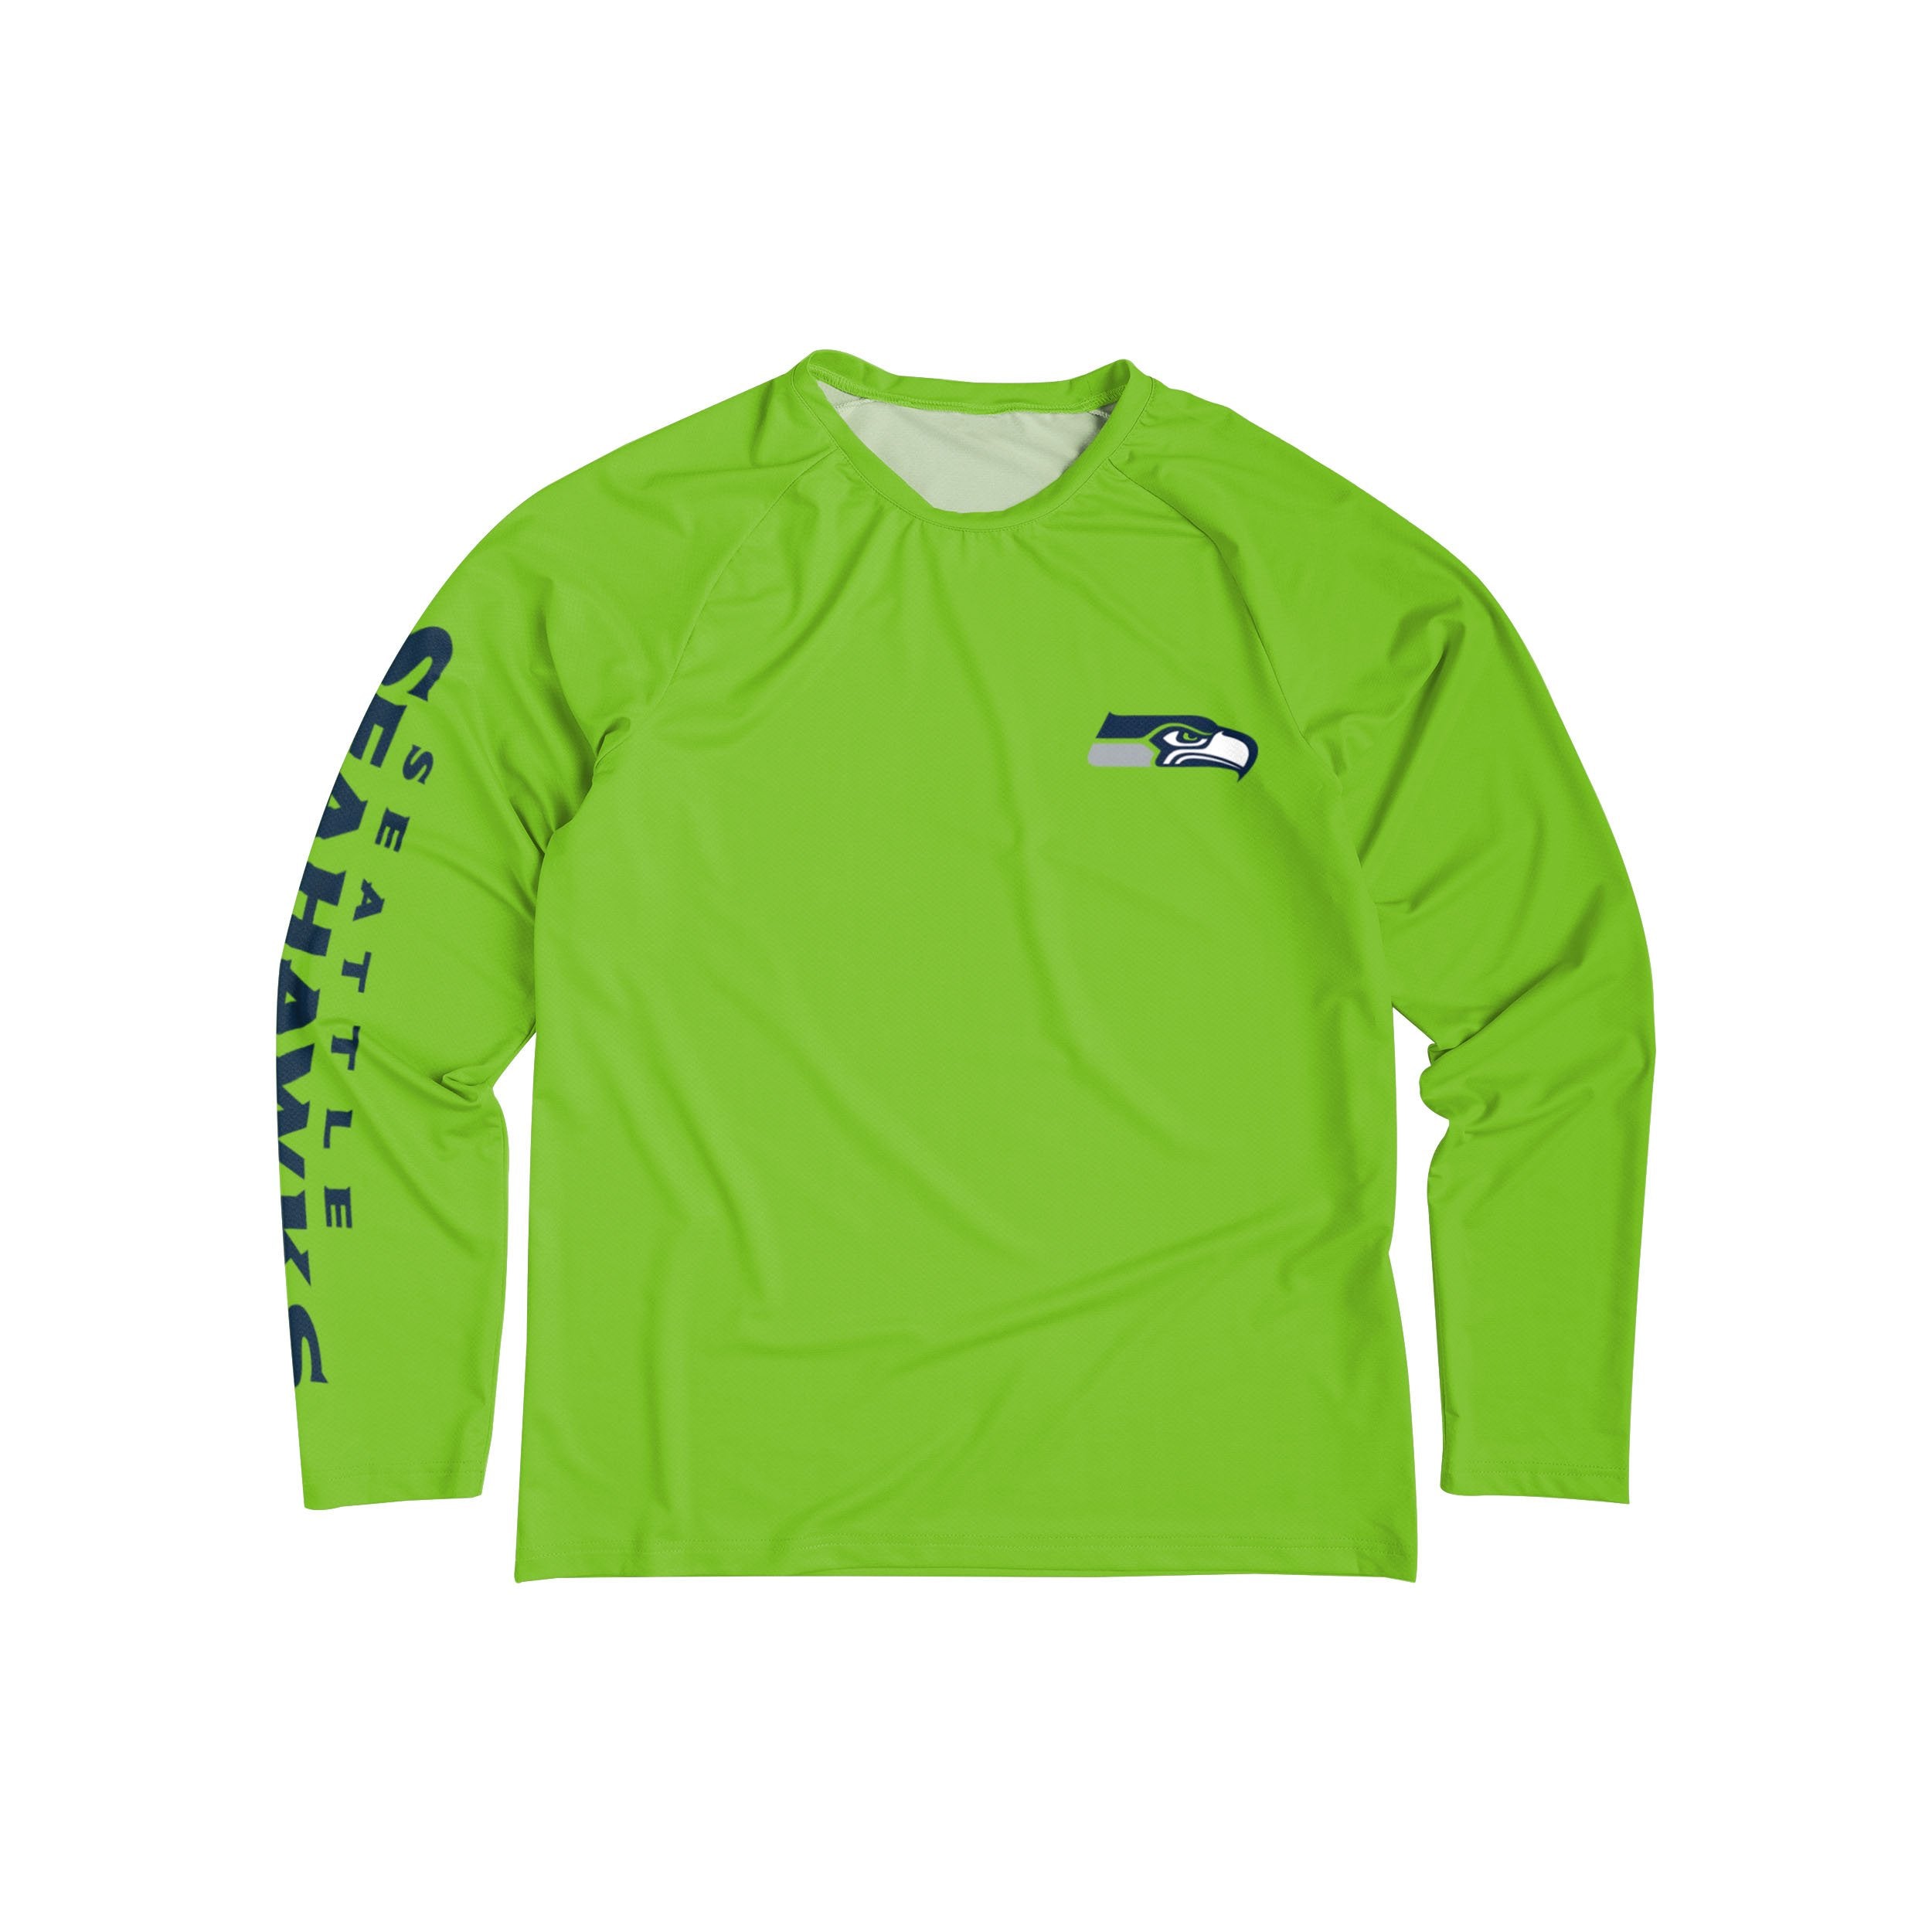 seahawks lime green shirt